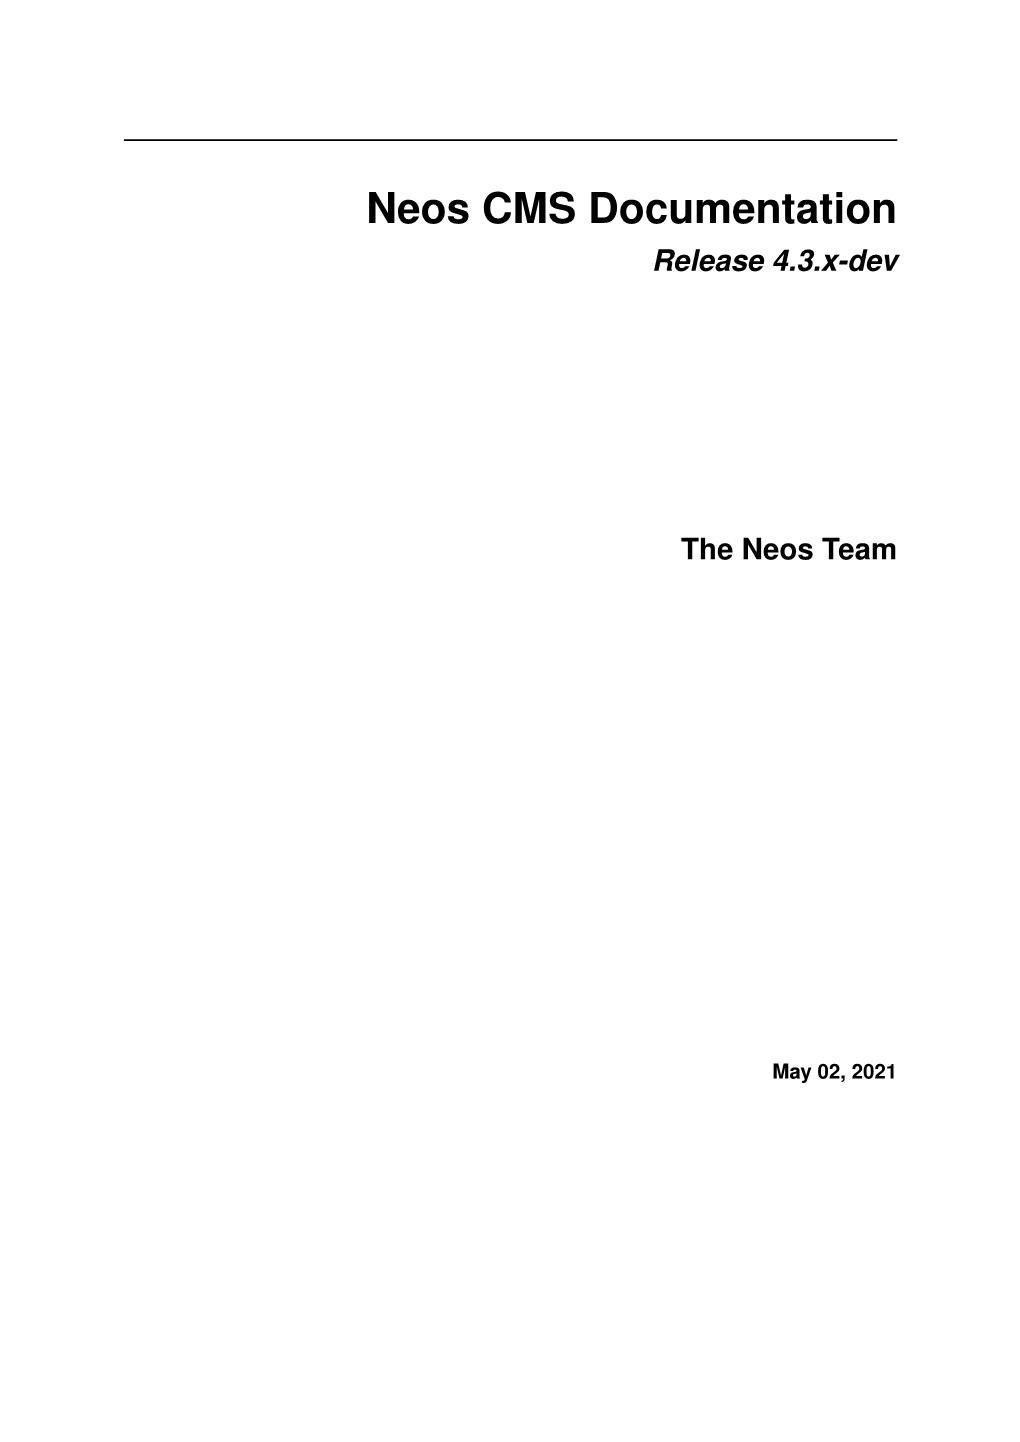 Neos CMS Documentation Release 4.3.X-Dev